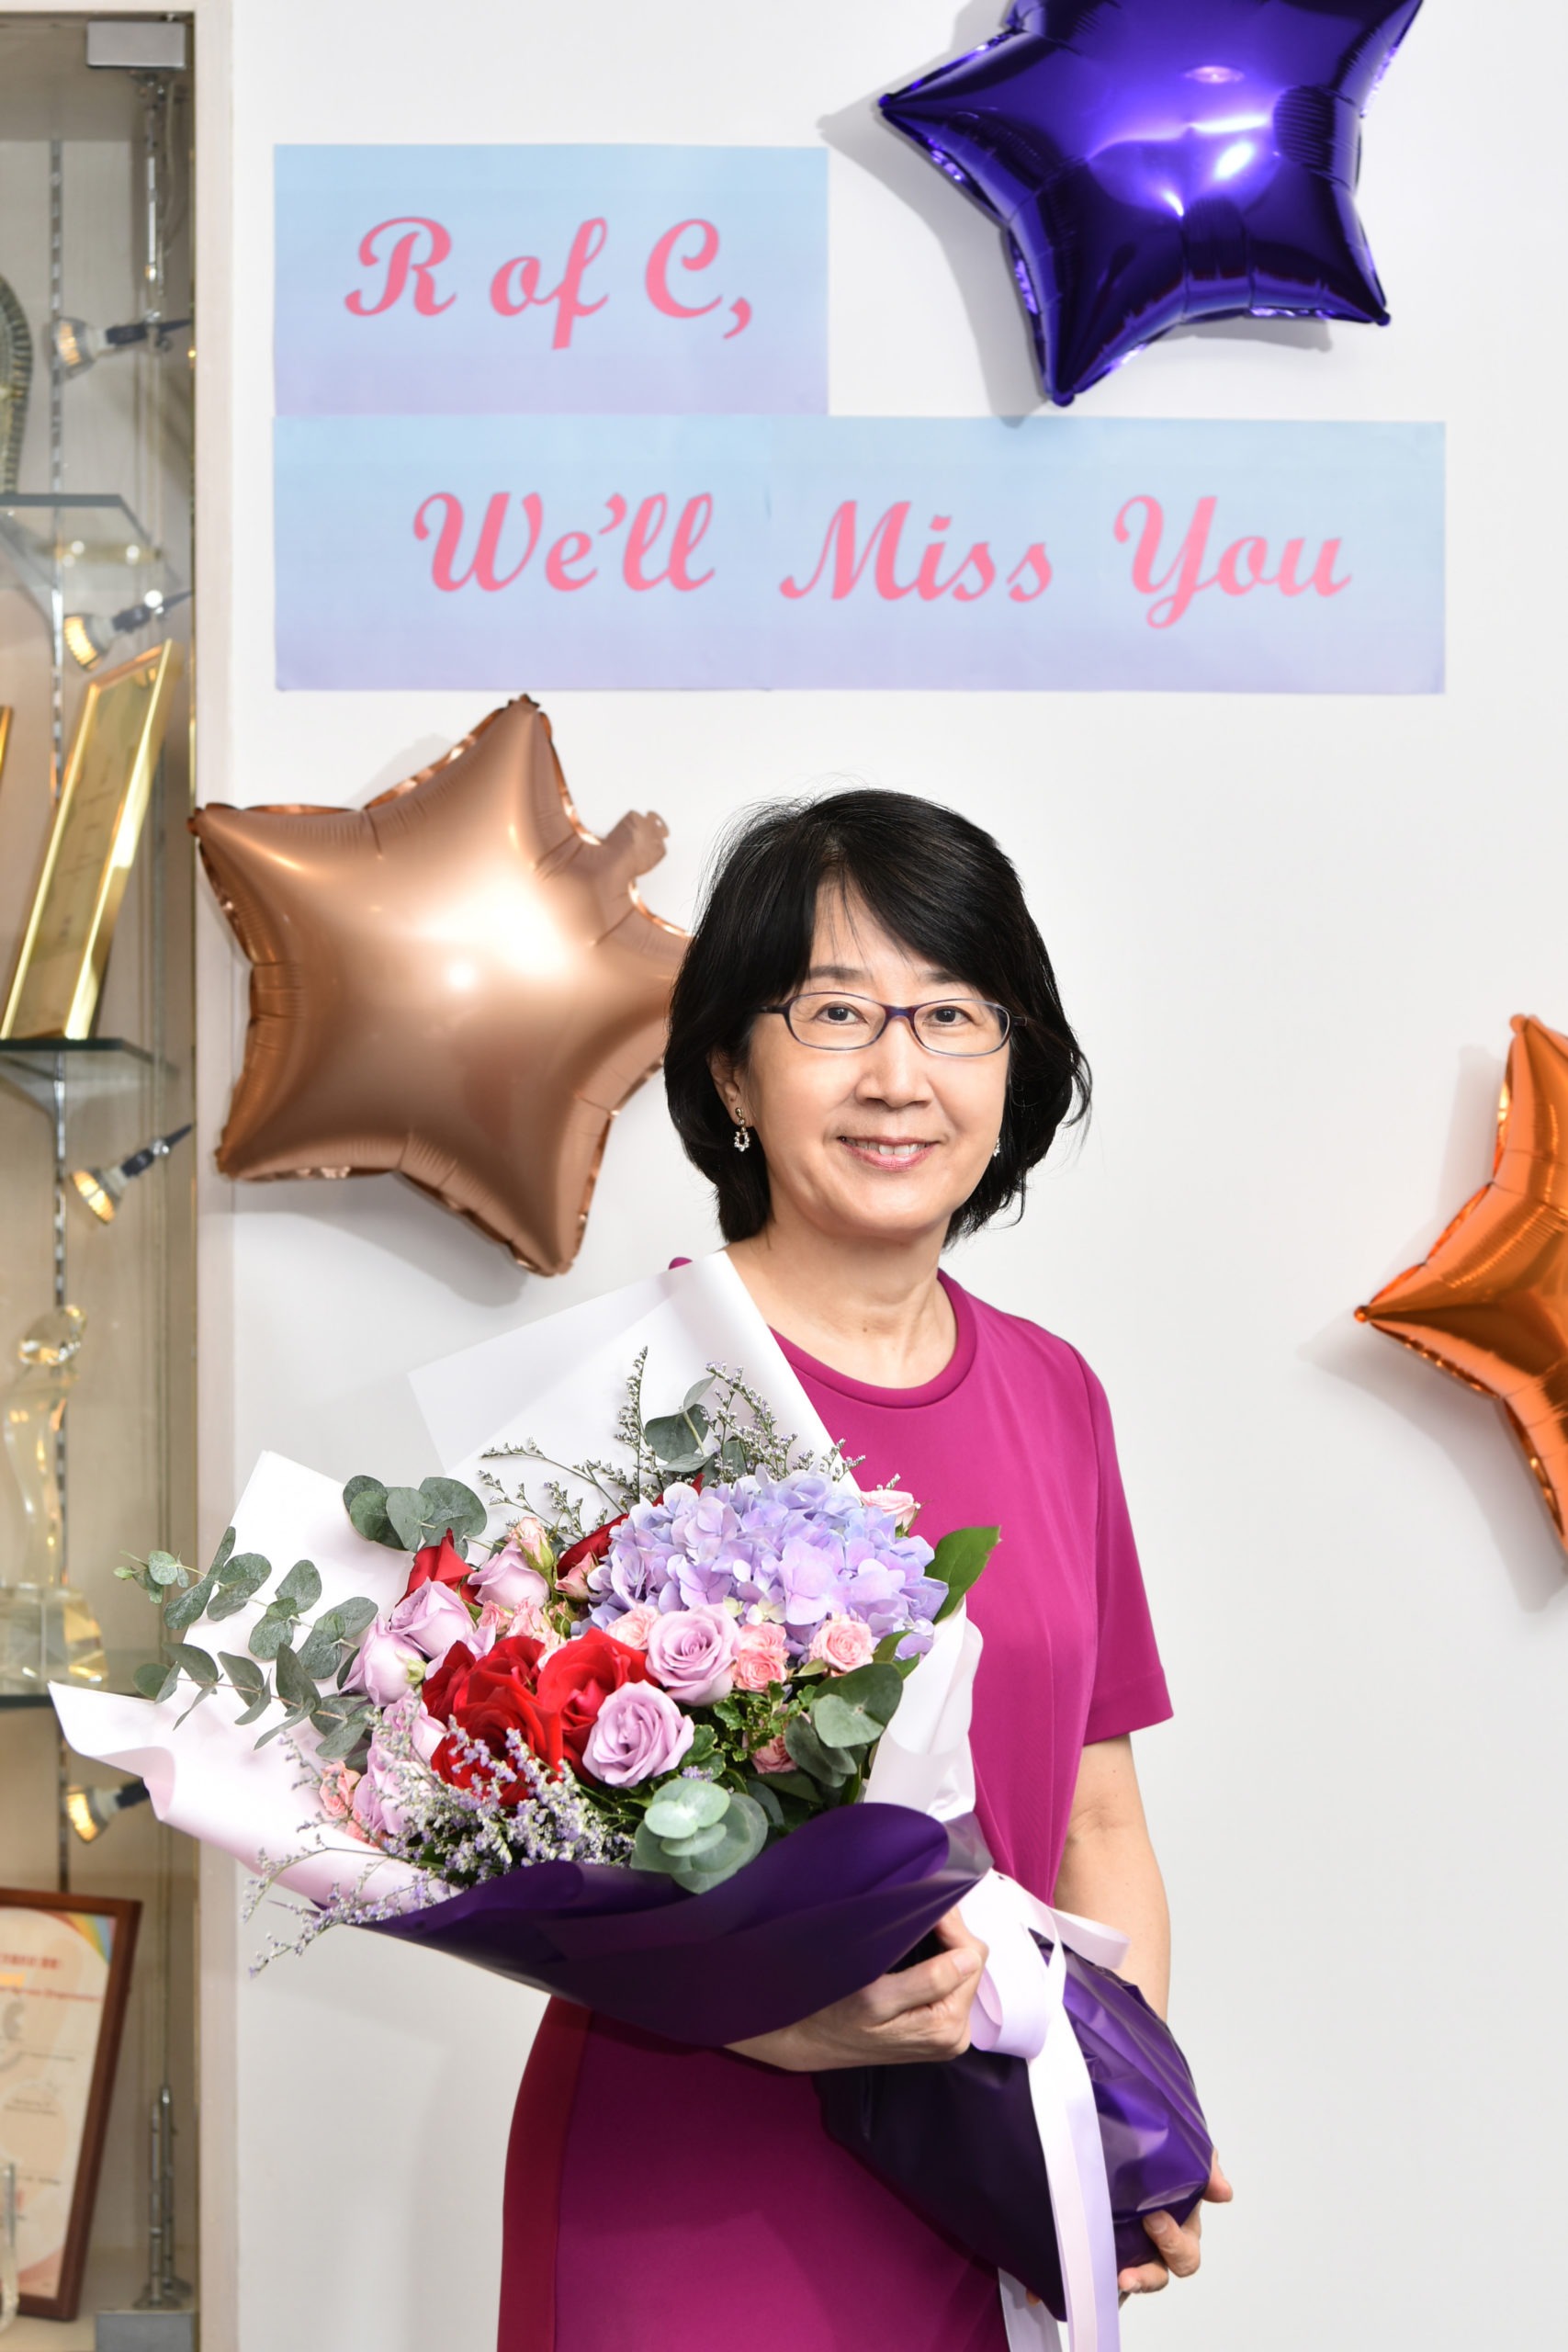 A Fond Farewell to Our Friend Ada Chung